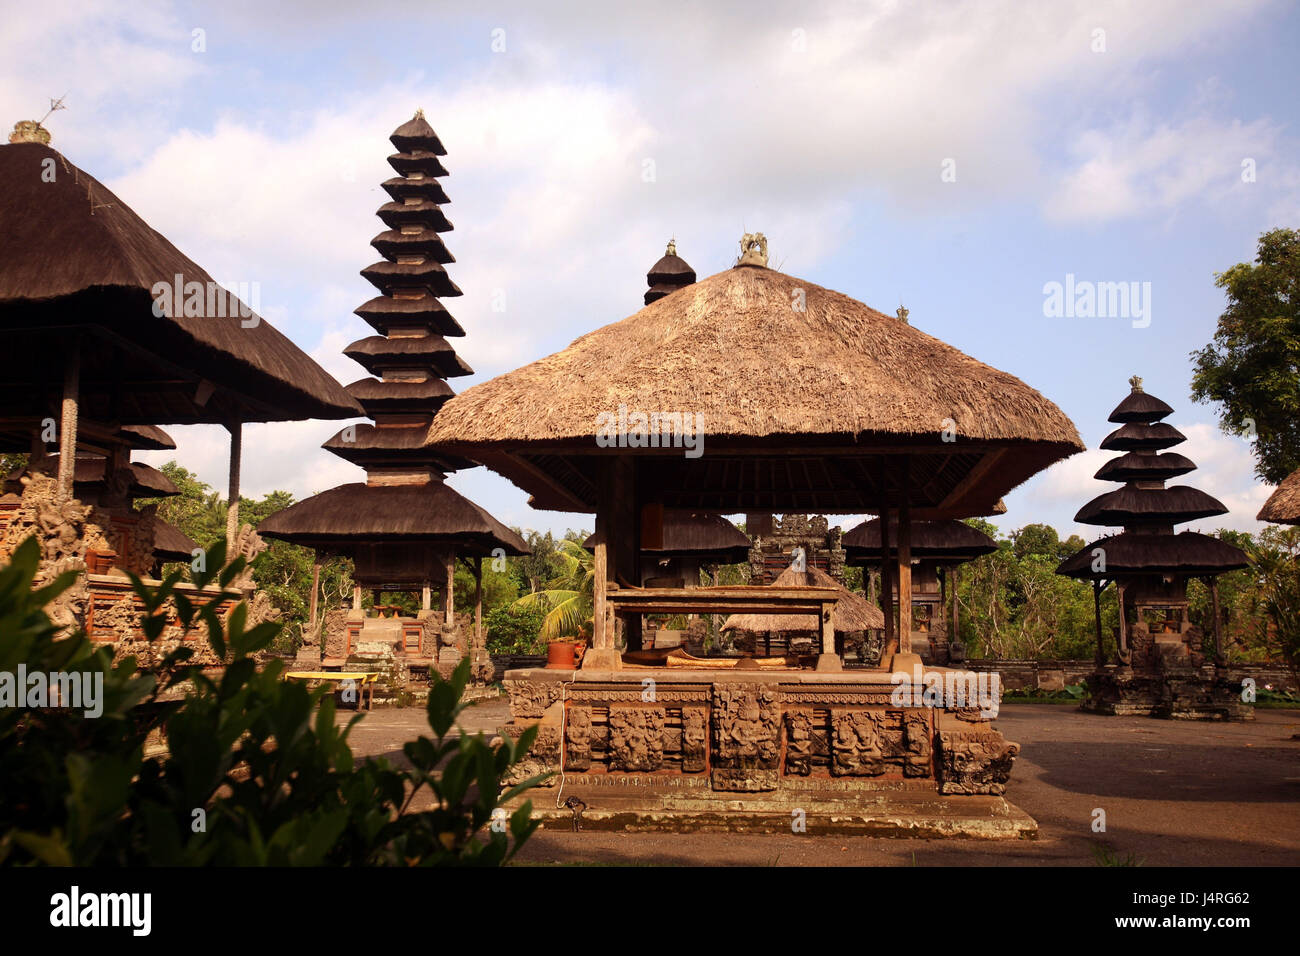 Indonesia, Bali, island, Mengwi, Pura Taman Ayun, temple, culture, architecture, Stock Photo